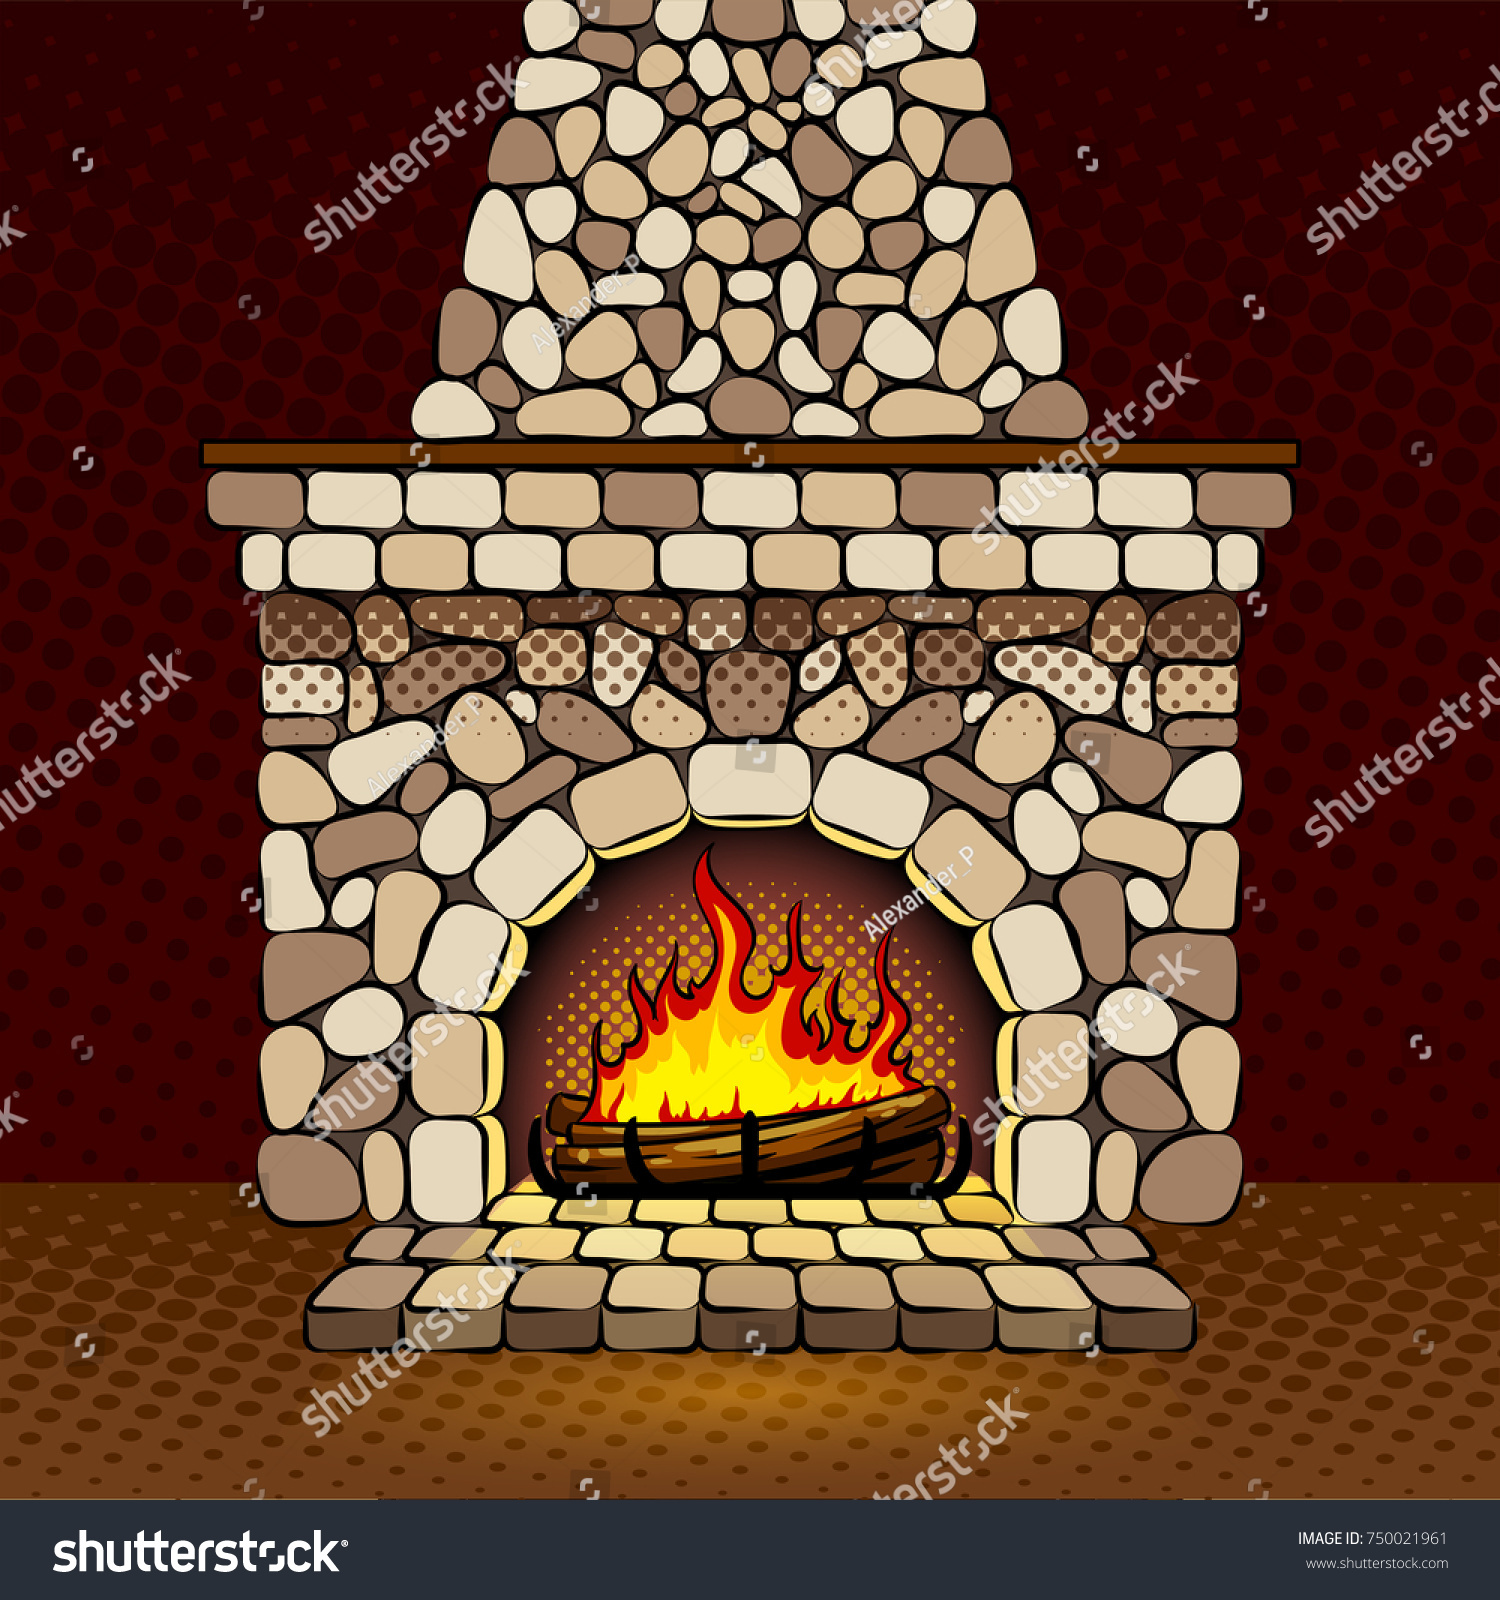 Fireplace Home Pop Art Retro Raster Stock Illustration 750021961 ...